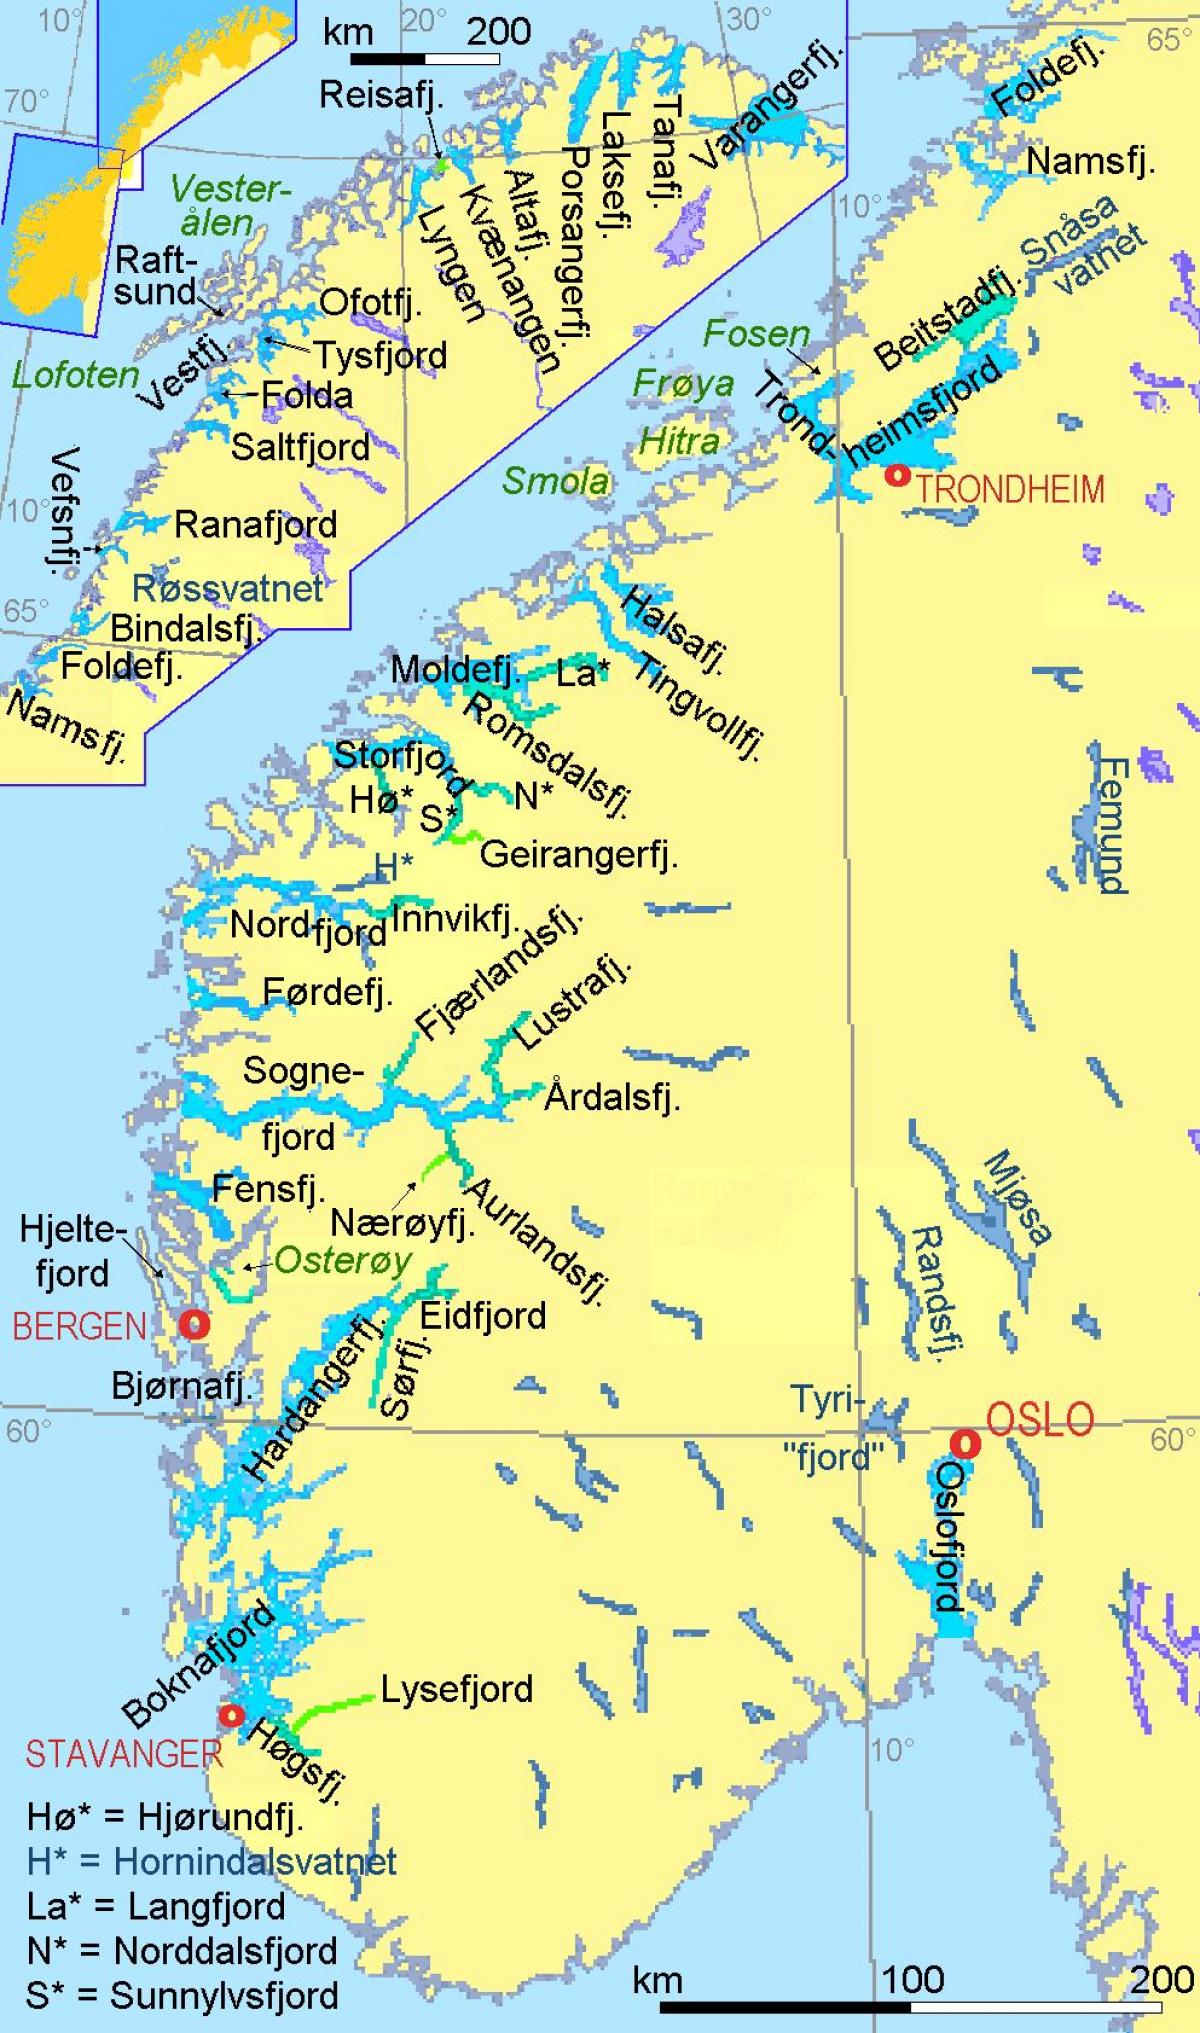 mapa de Noruega mostrando fiordos